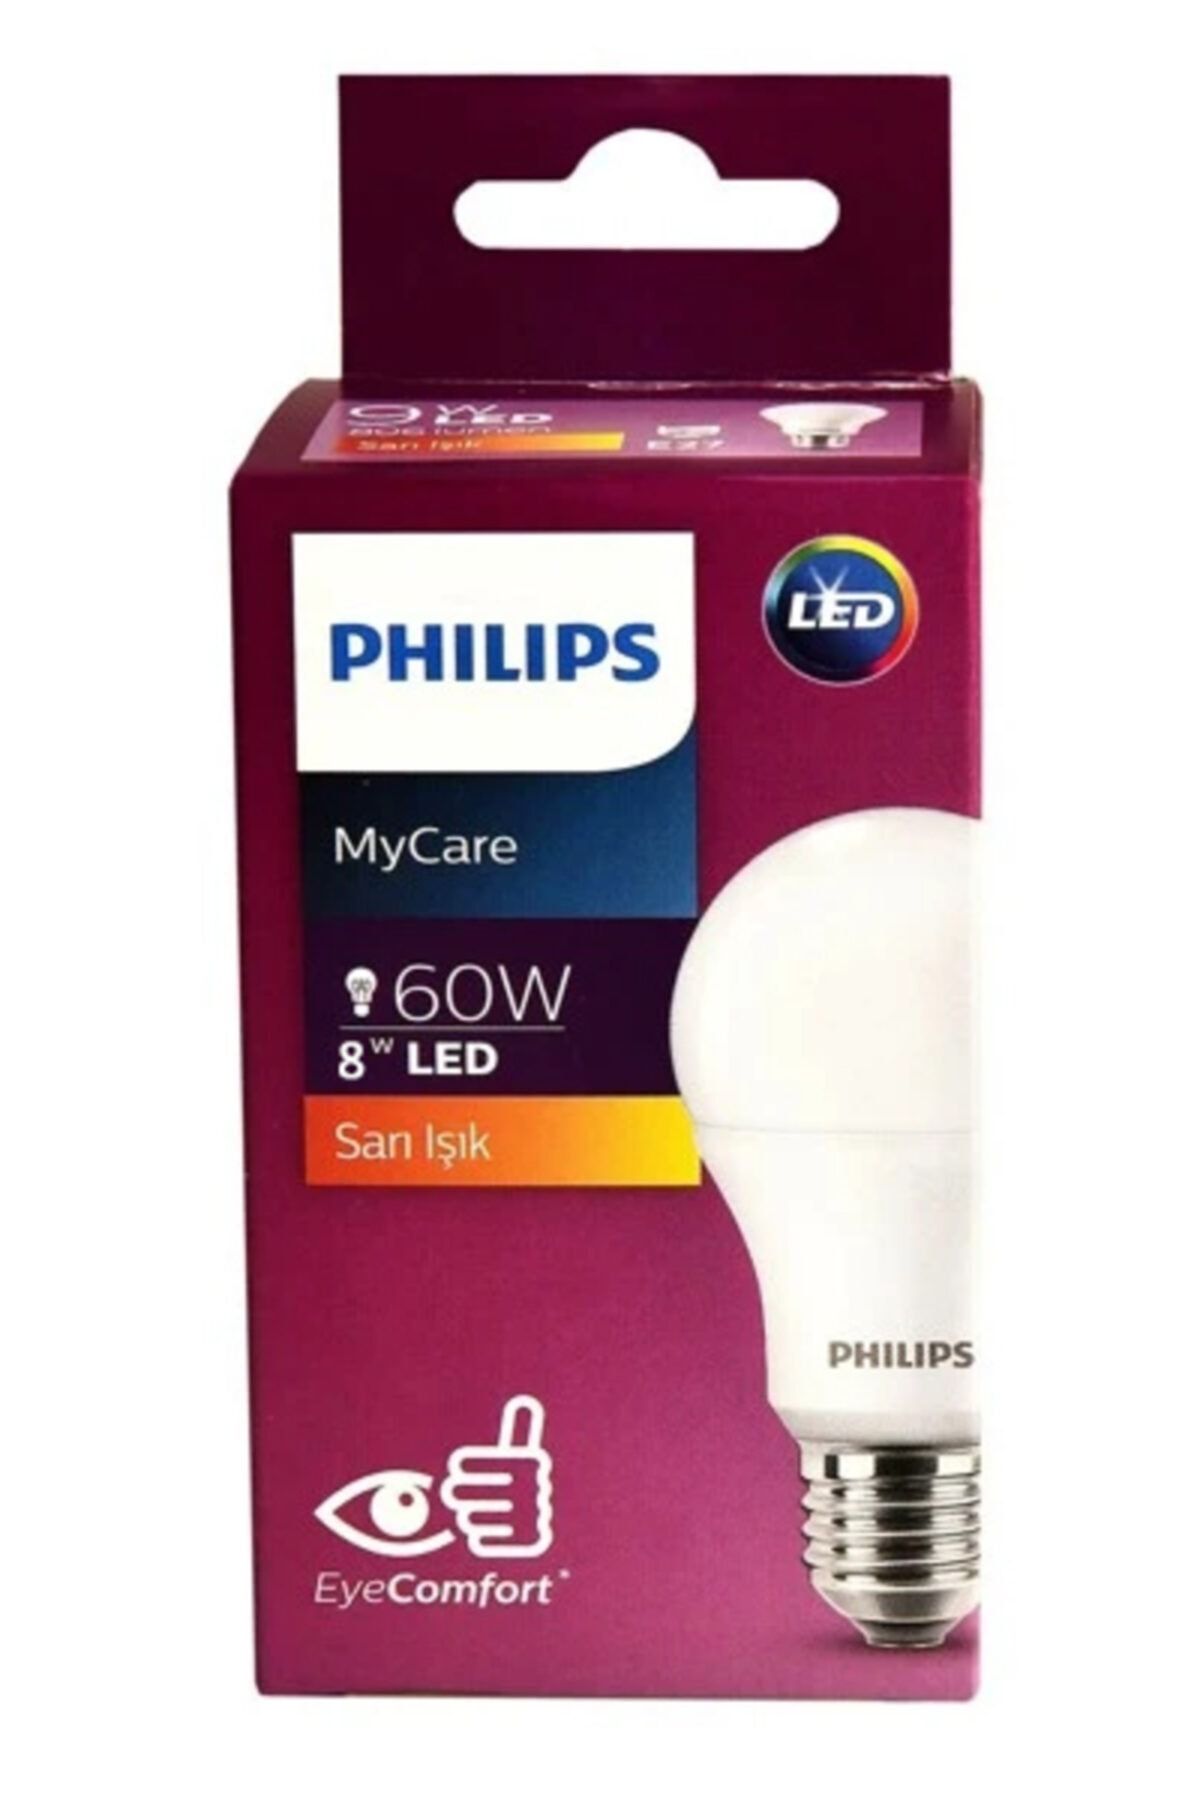 Philips led. Philips лампочка светодиодная Eye Comfort купить. Philips лампочка светодиодная 8w Eye Comfort купить. Филипс маркет